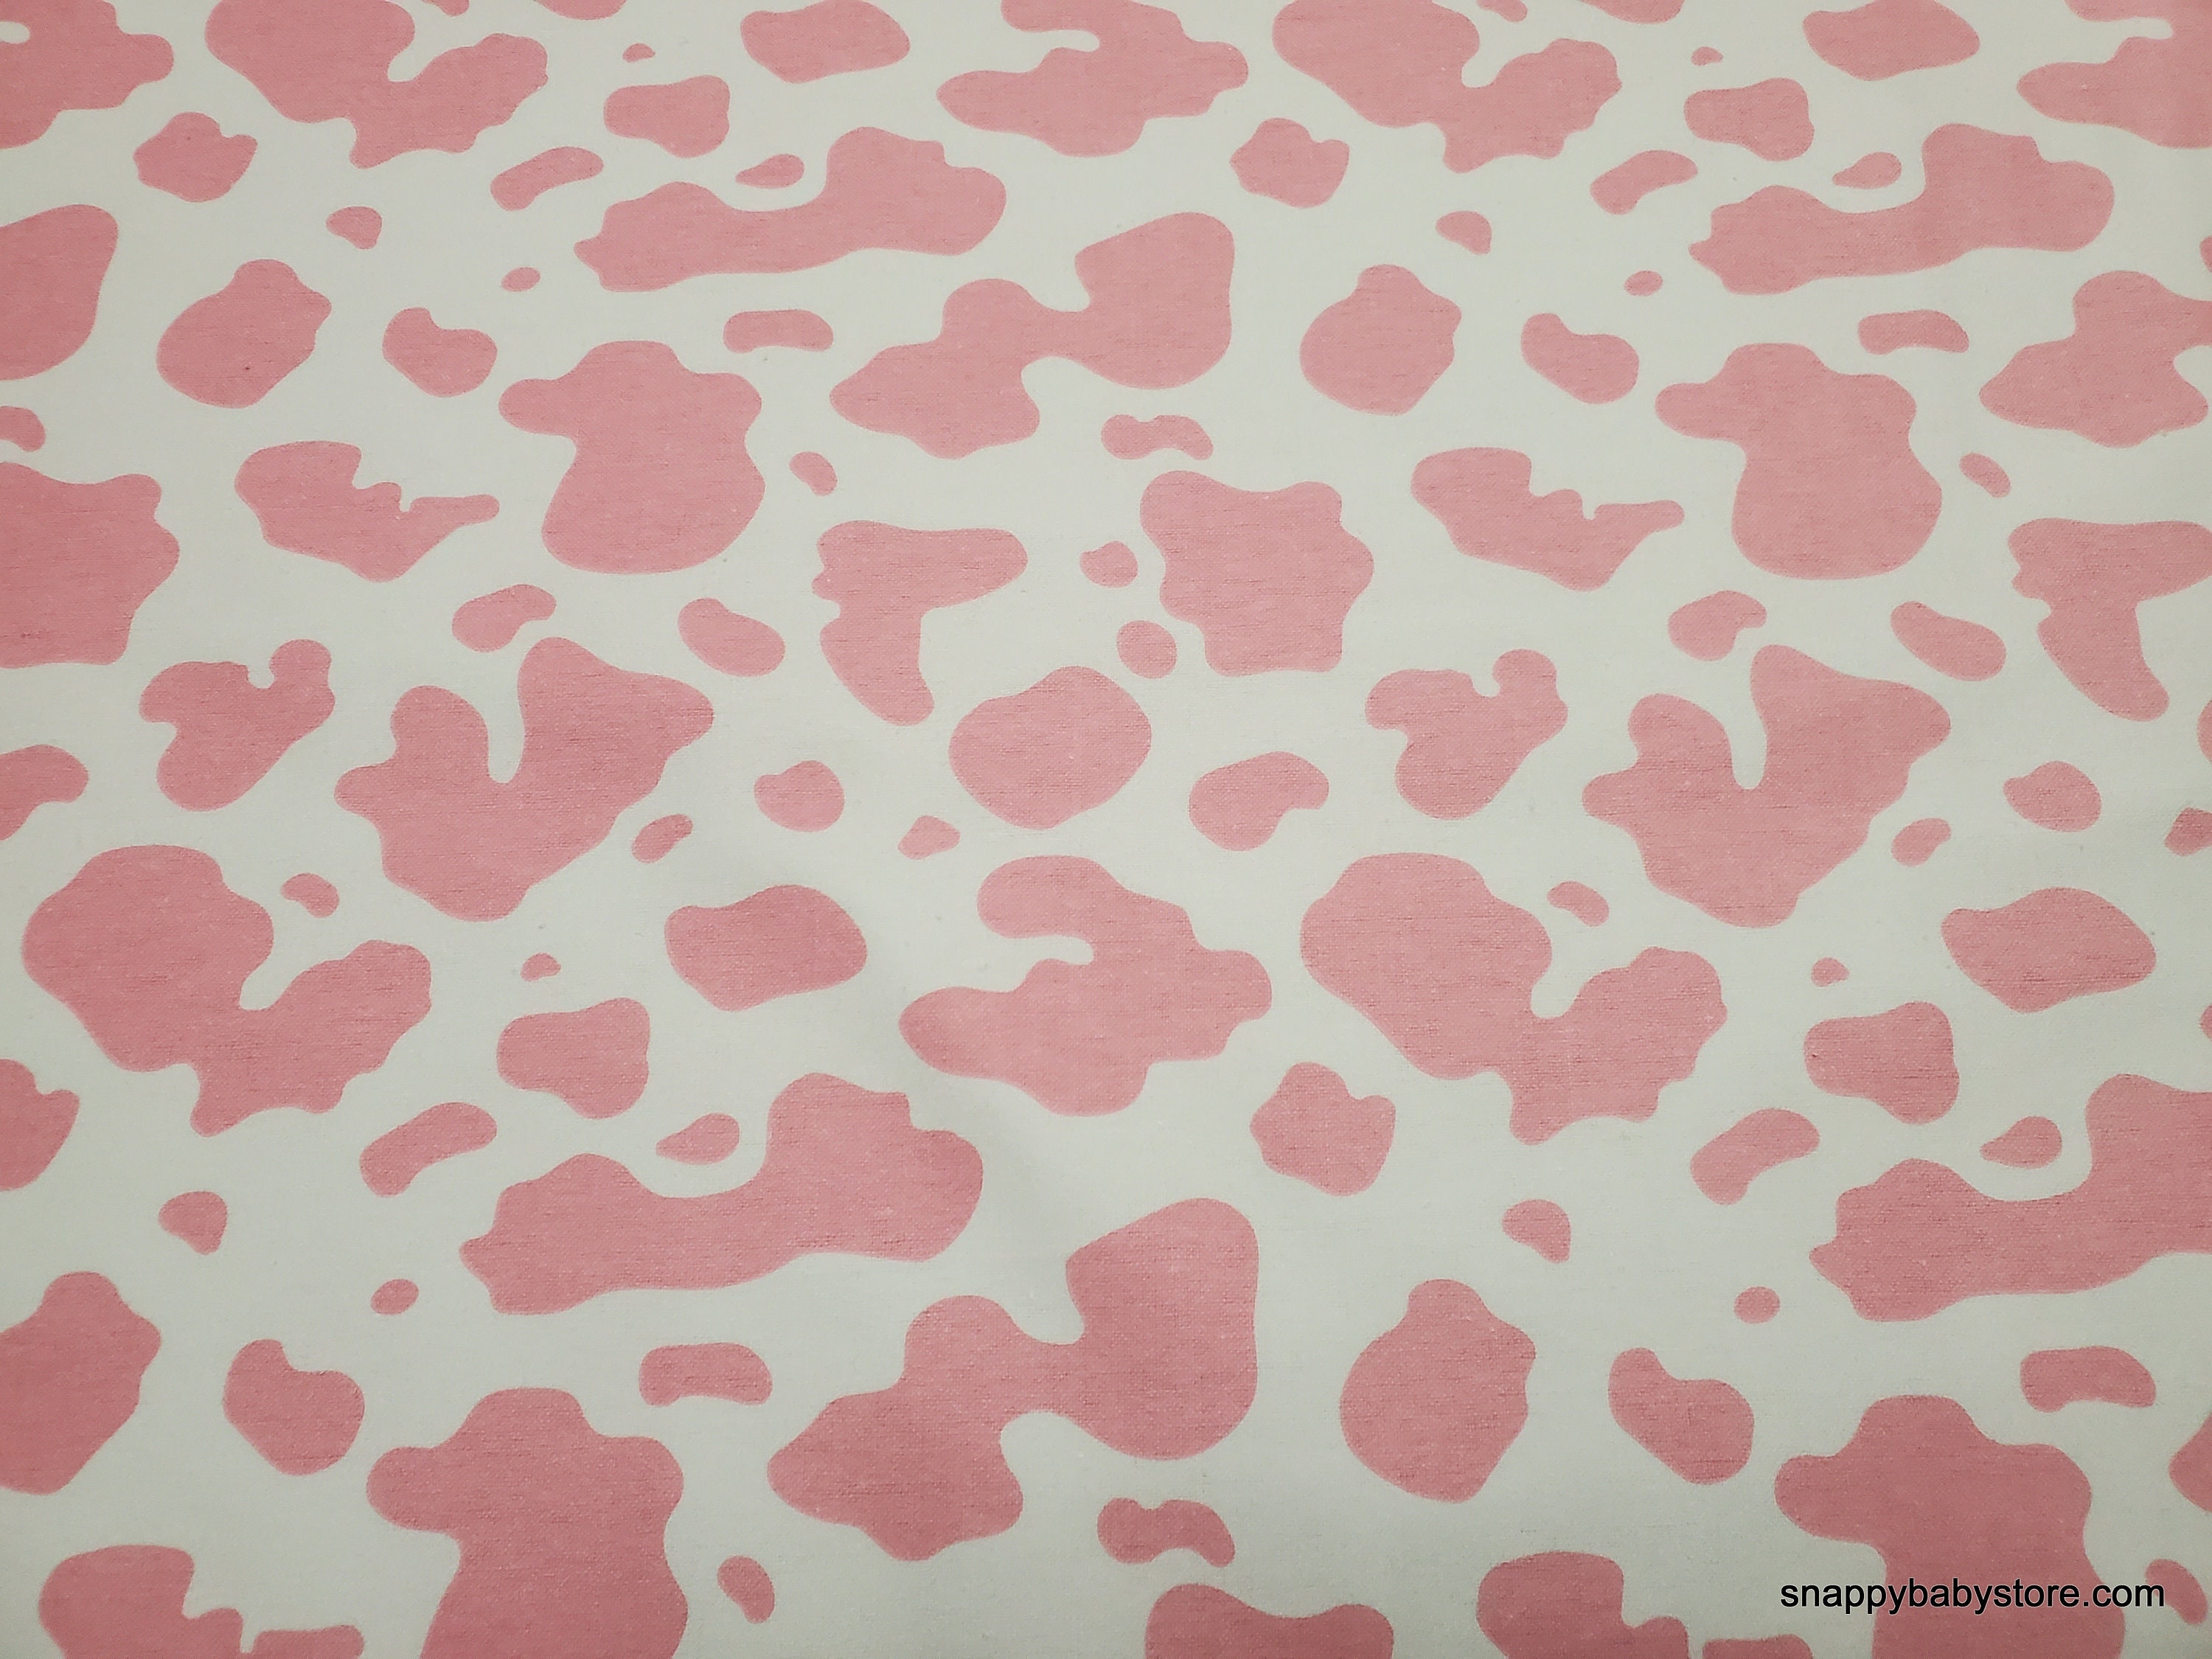 Aesthetic Pink Cow Print Wallpaper